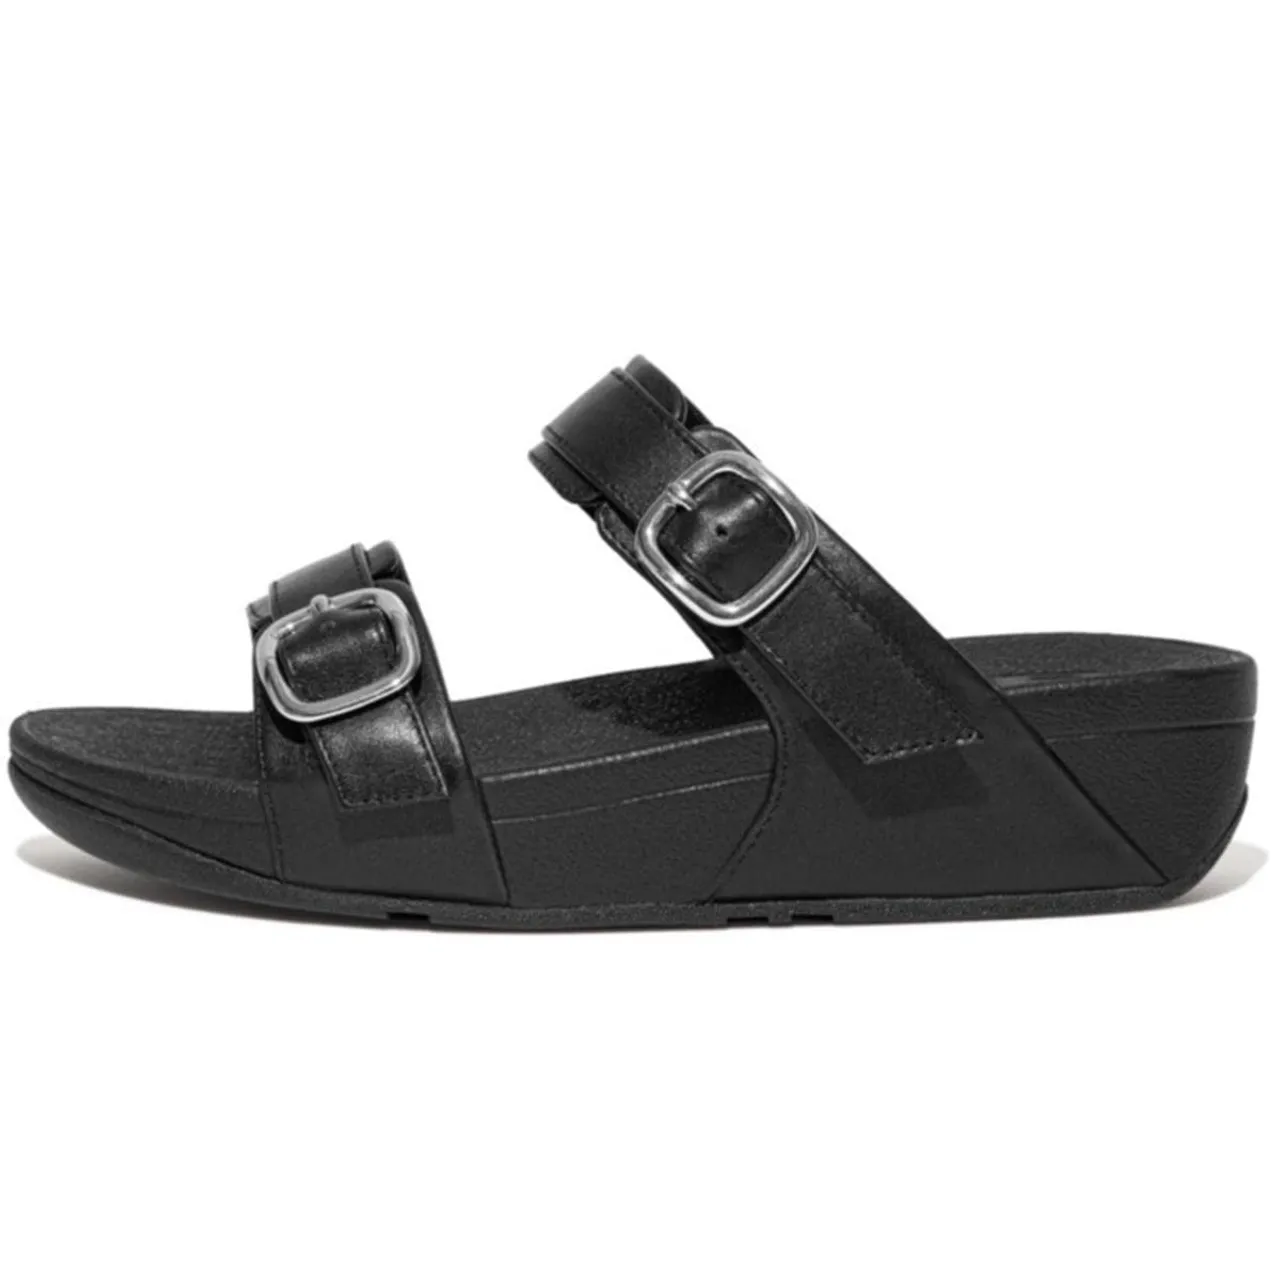 Fitflop Women's LULU Adjustable Leather Slides Sandal